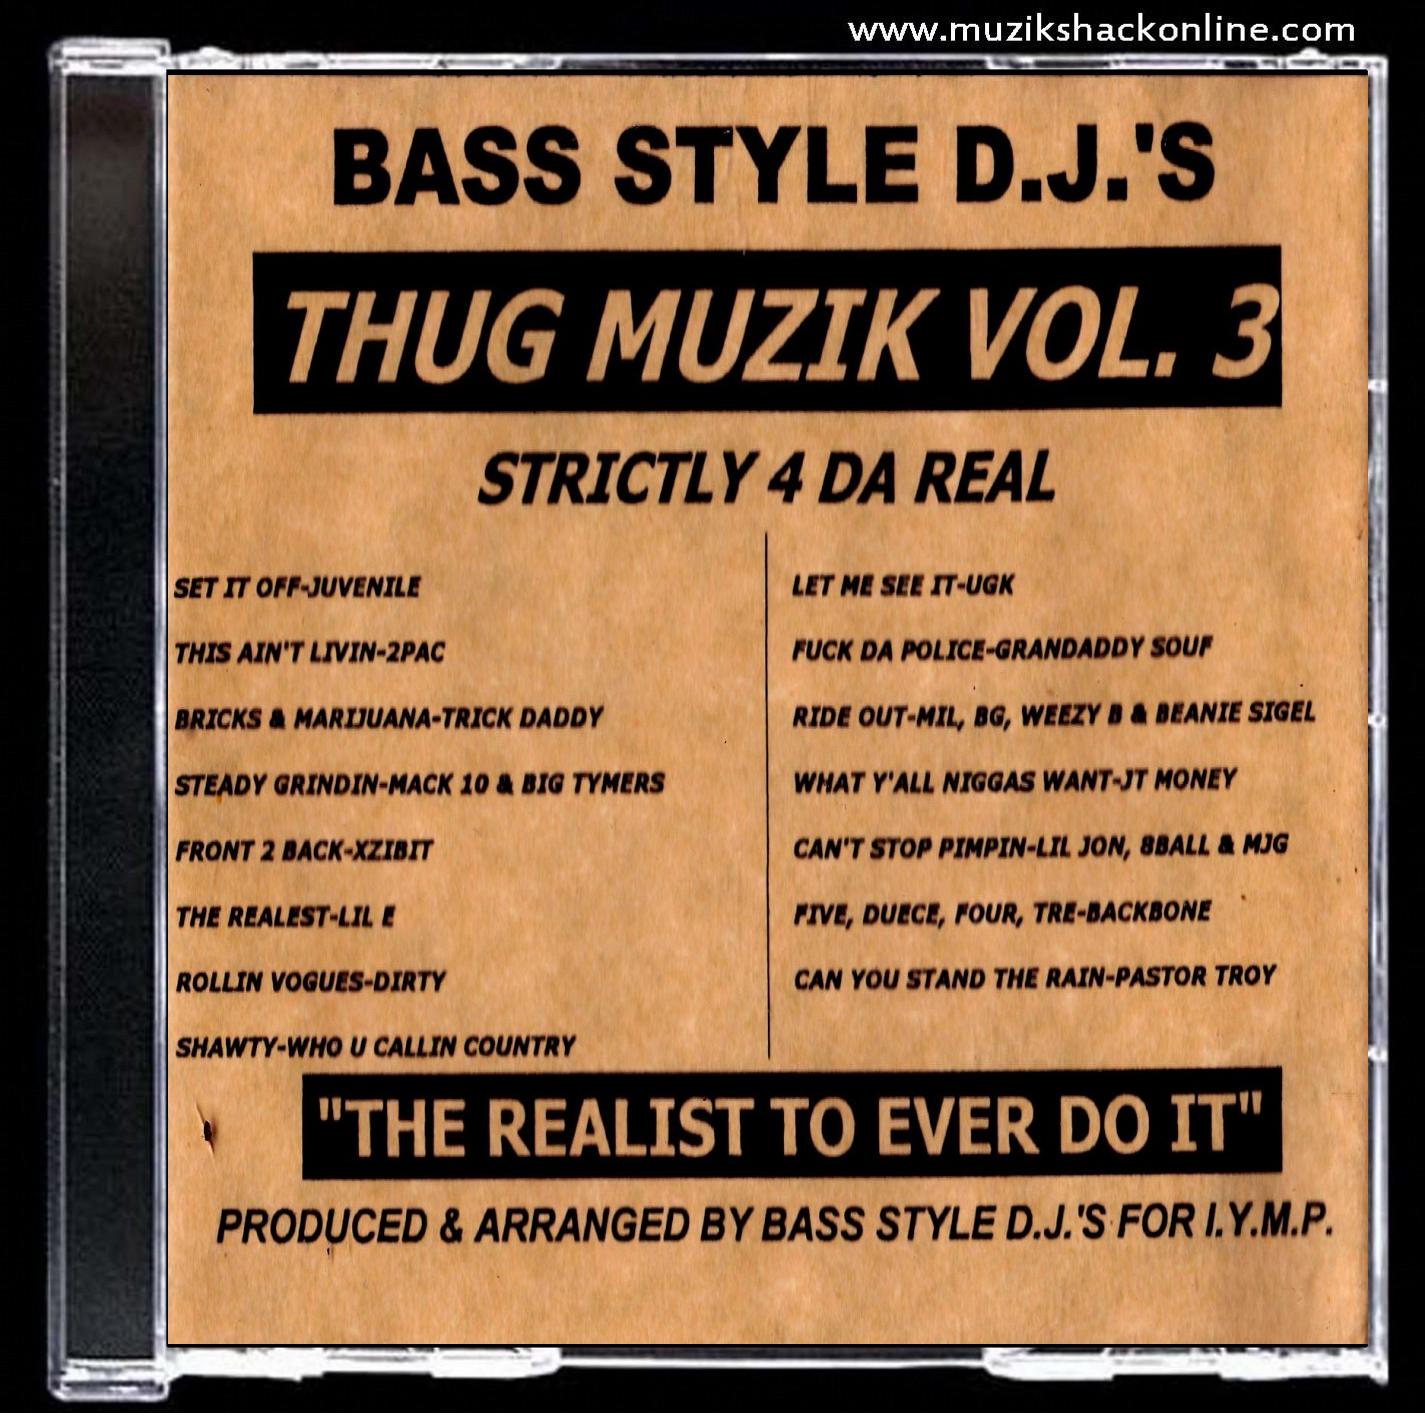 BASS STYLE - THUG MUZIK #6202 (RARE COPY) c2001